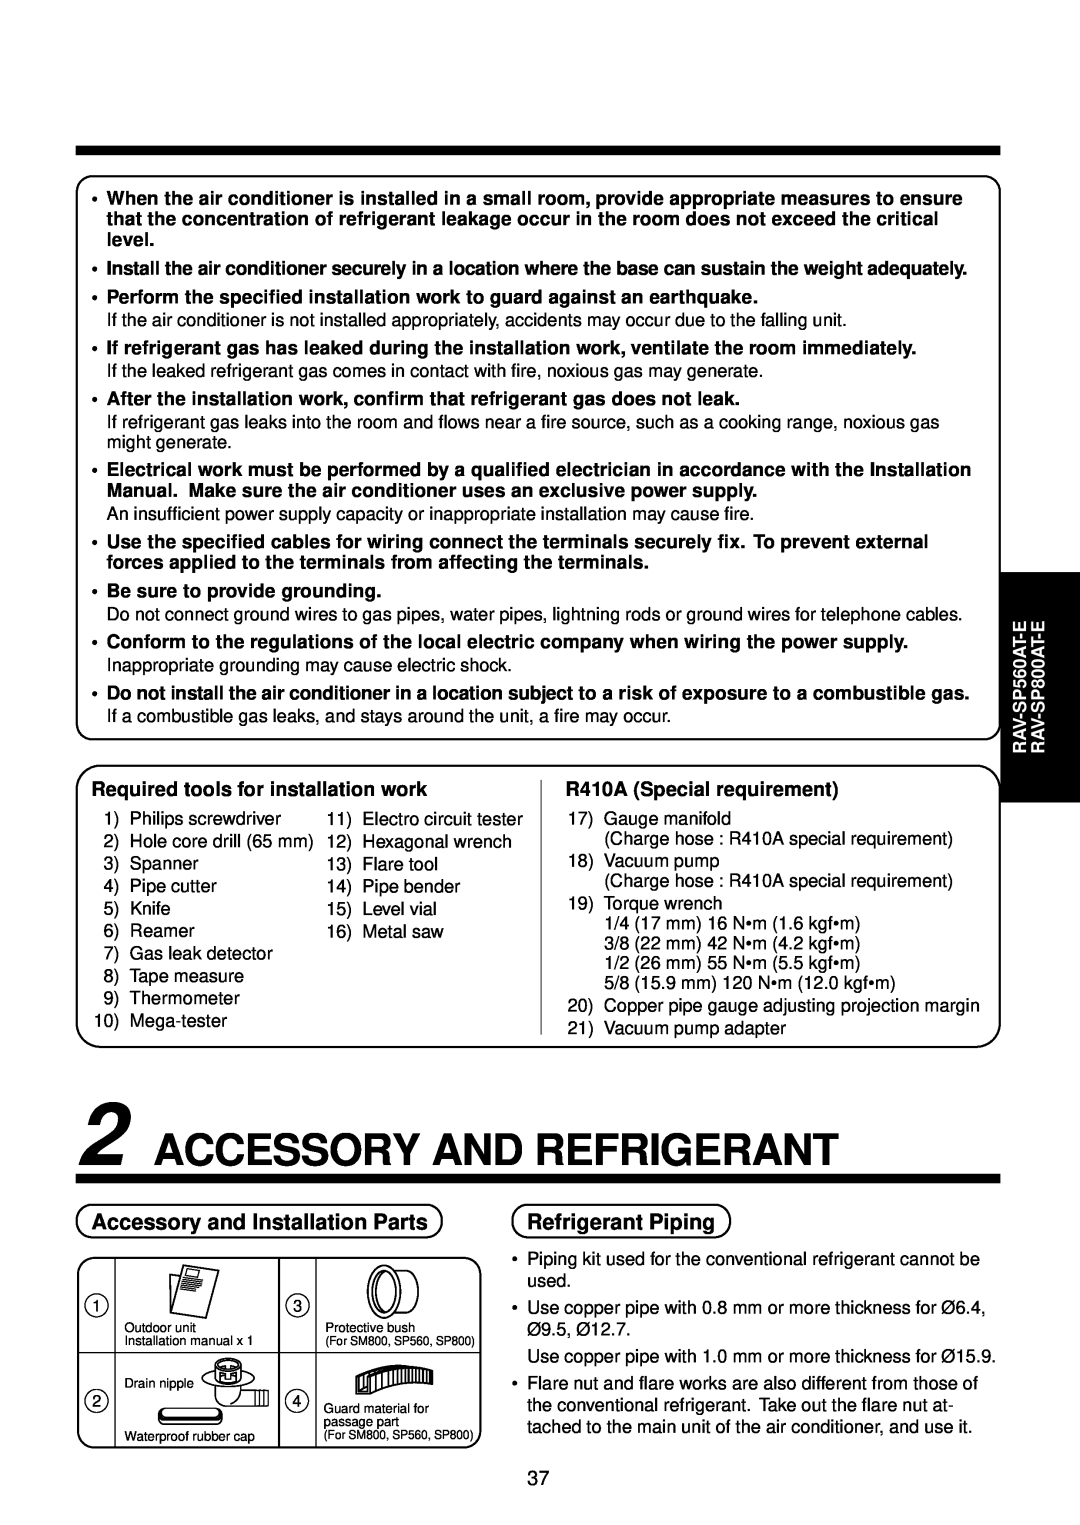 Toshiba RAV-SP560AT-E, RAV-SP1400UT-E Accessory And Refrigerant, Accessory and Installation Parts, Refrigerant Piping 